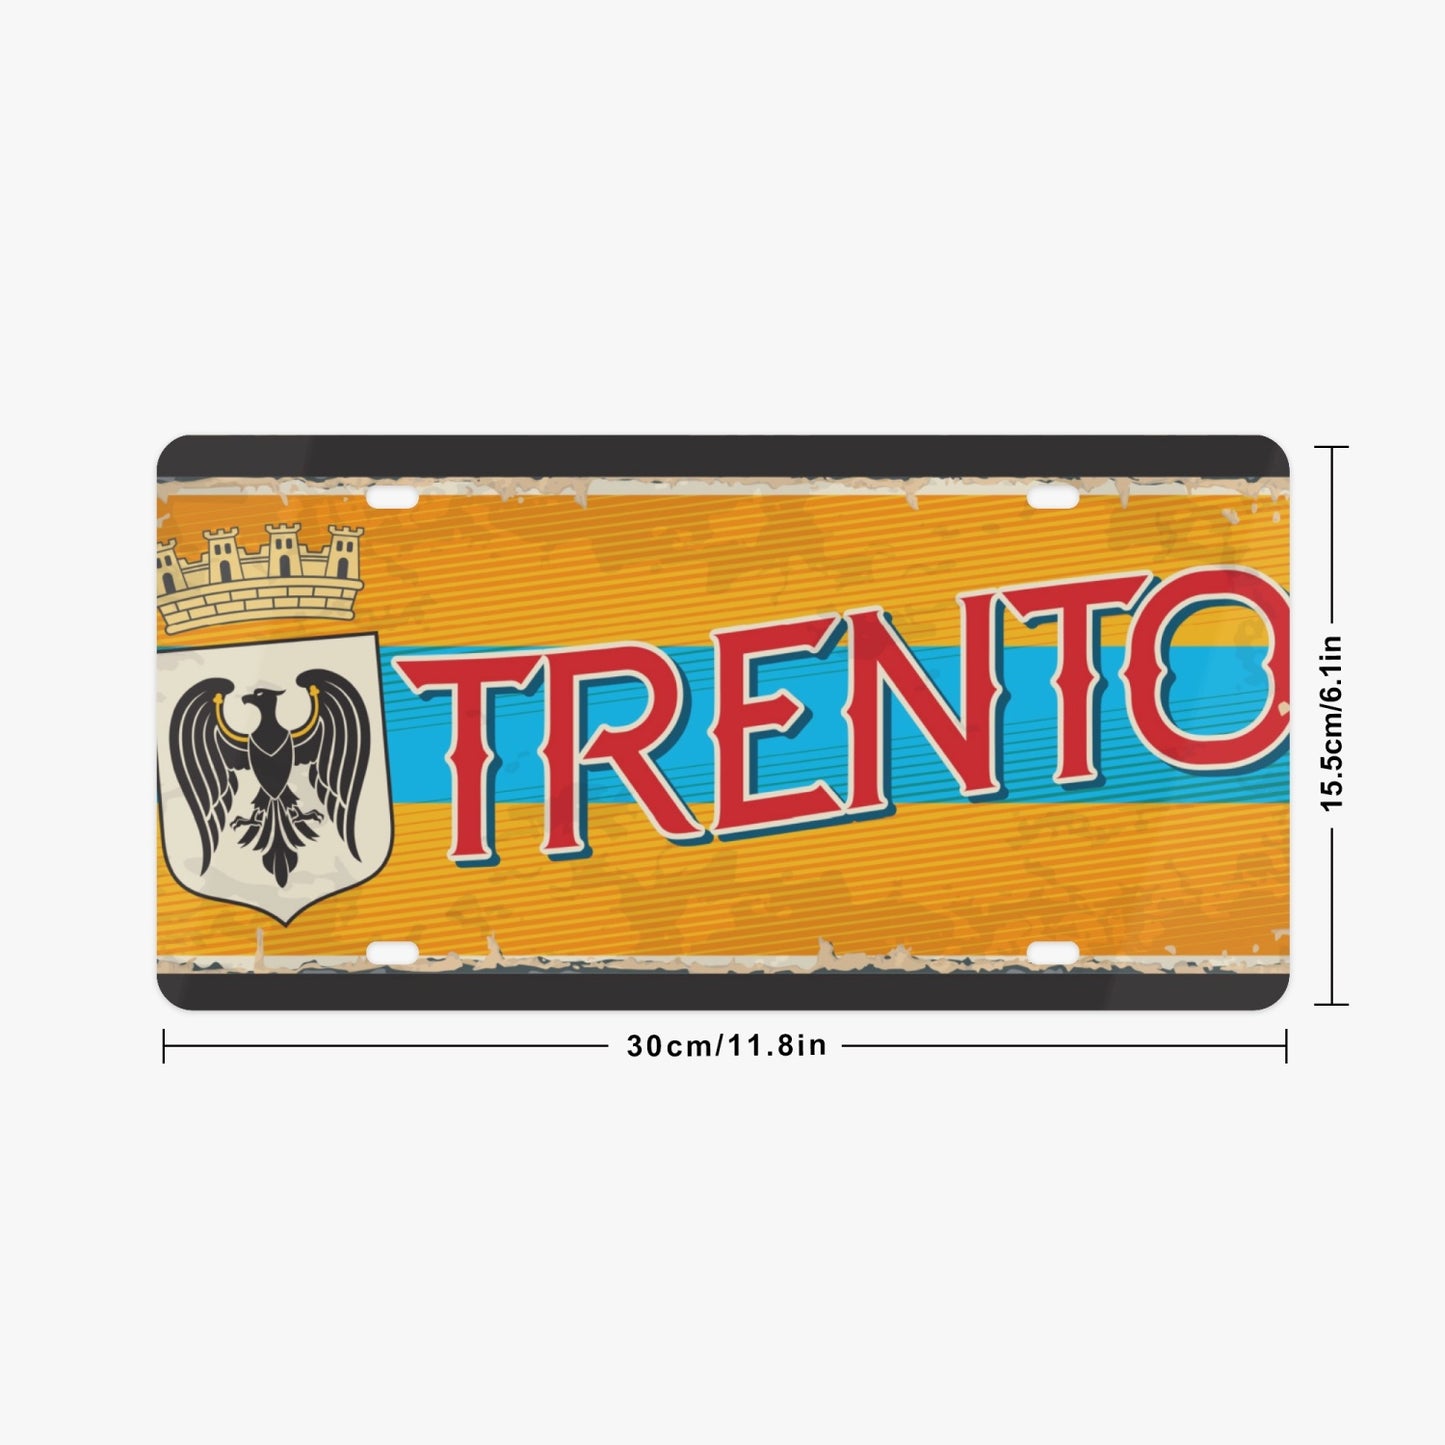 Trento License Plate Italian Style